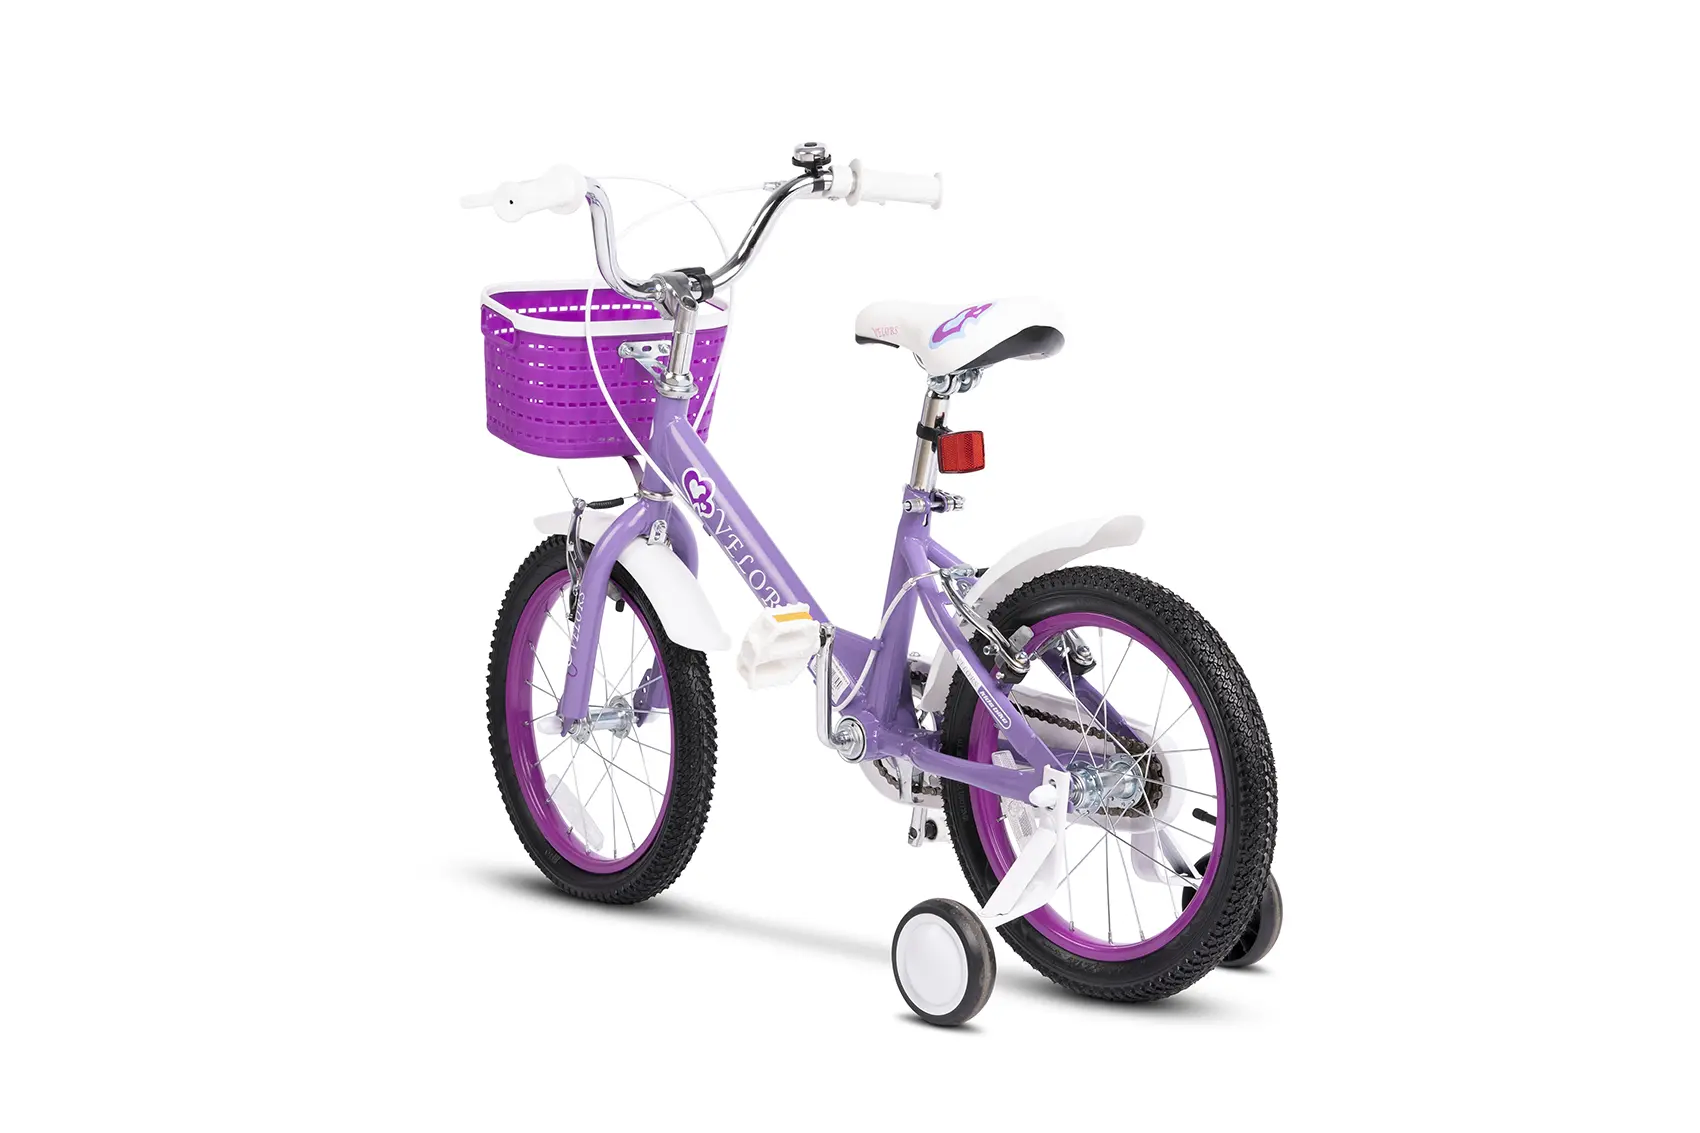 Bicicleta pentru copii Velors V1602B, cadru otel, 16